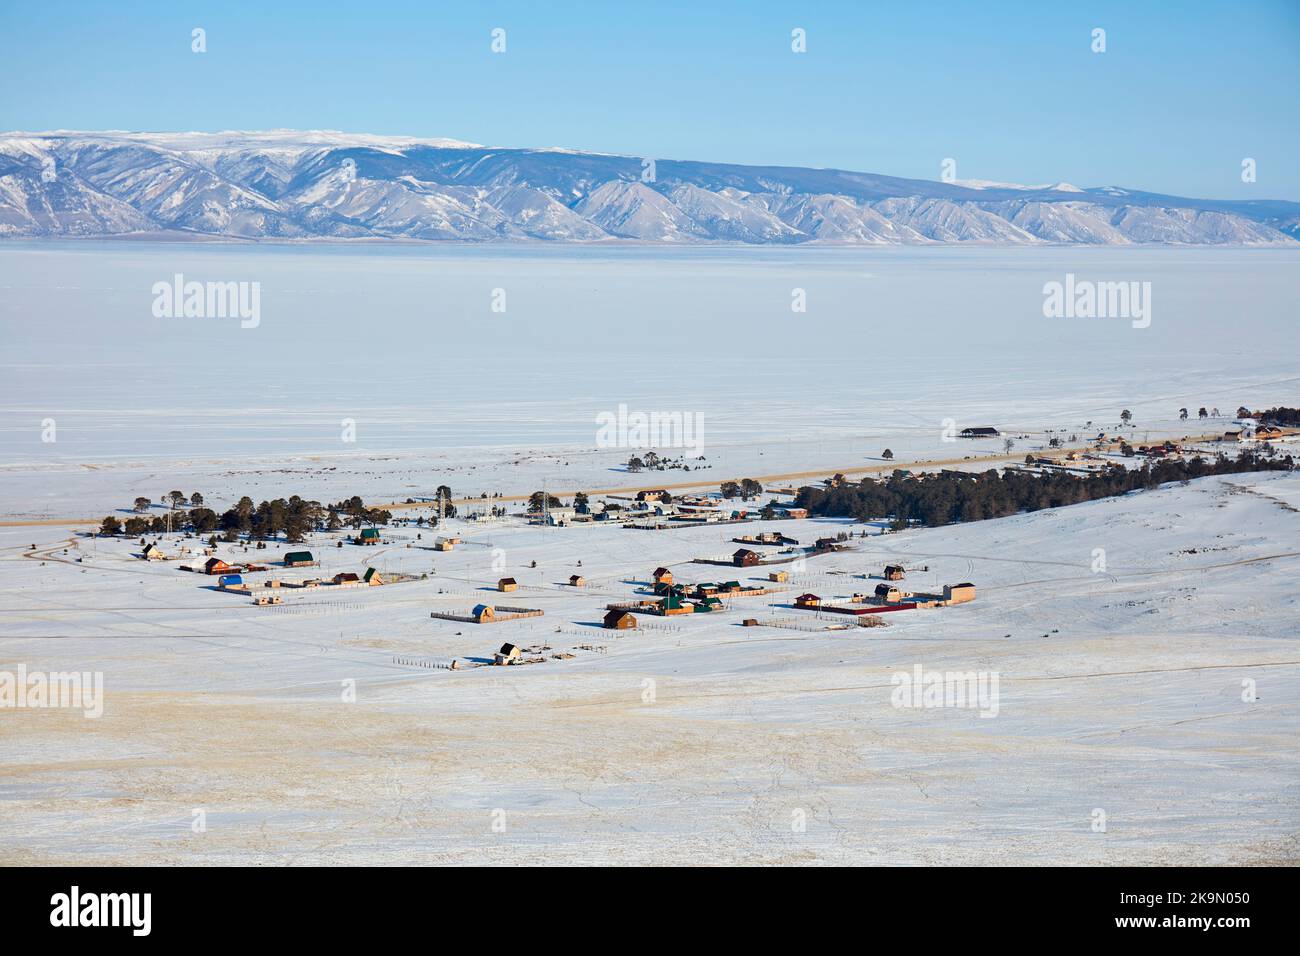 SIberian tundra scenary in winter with snow Stock Photo